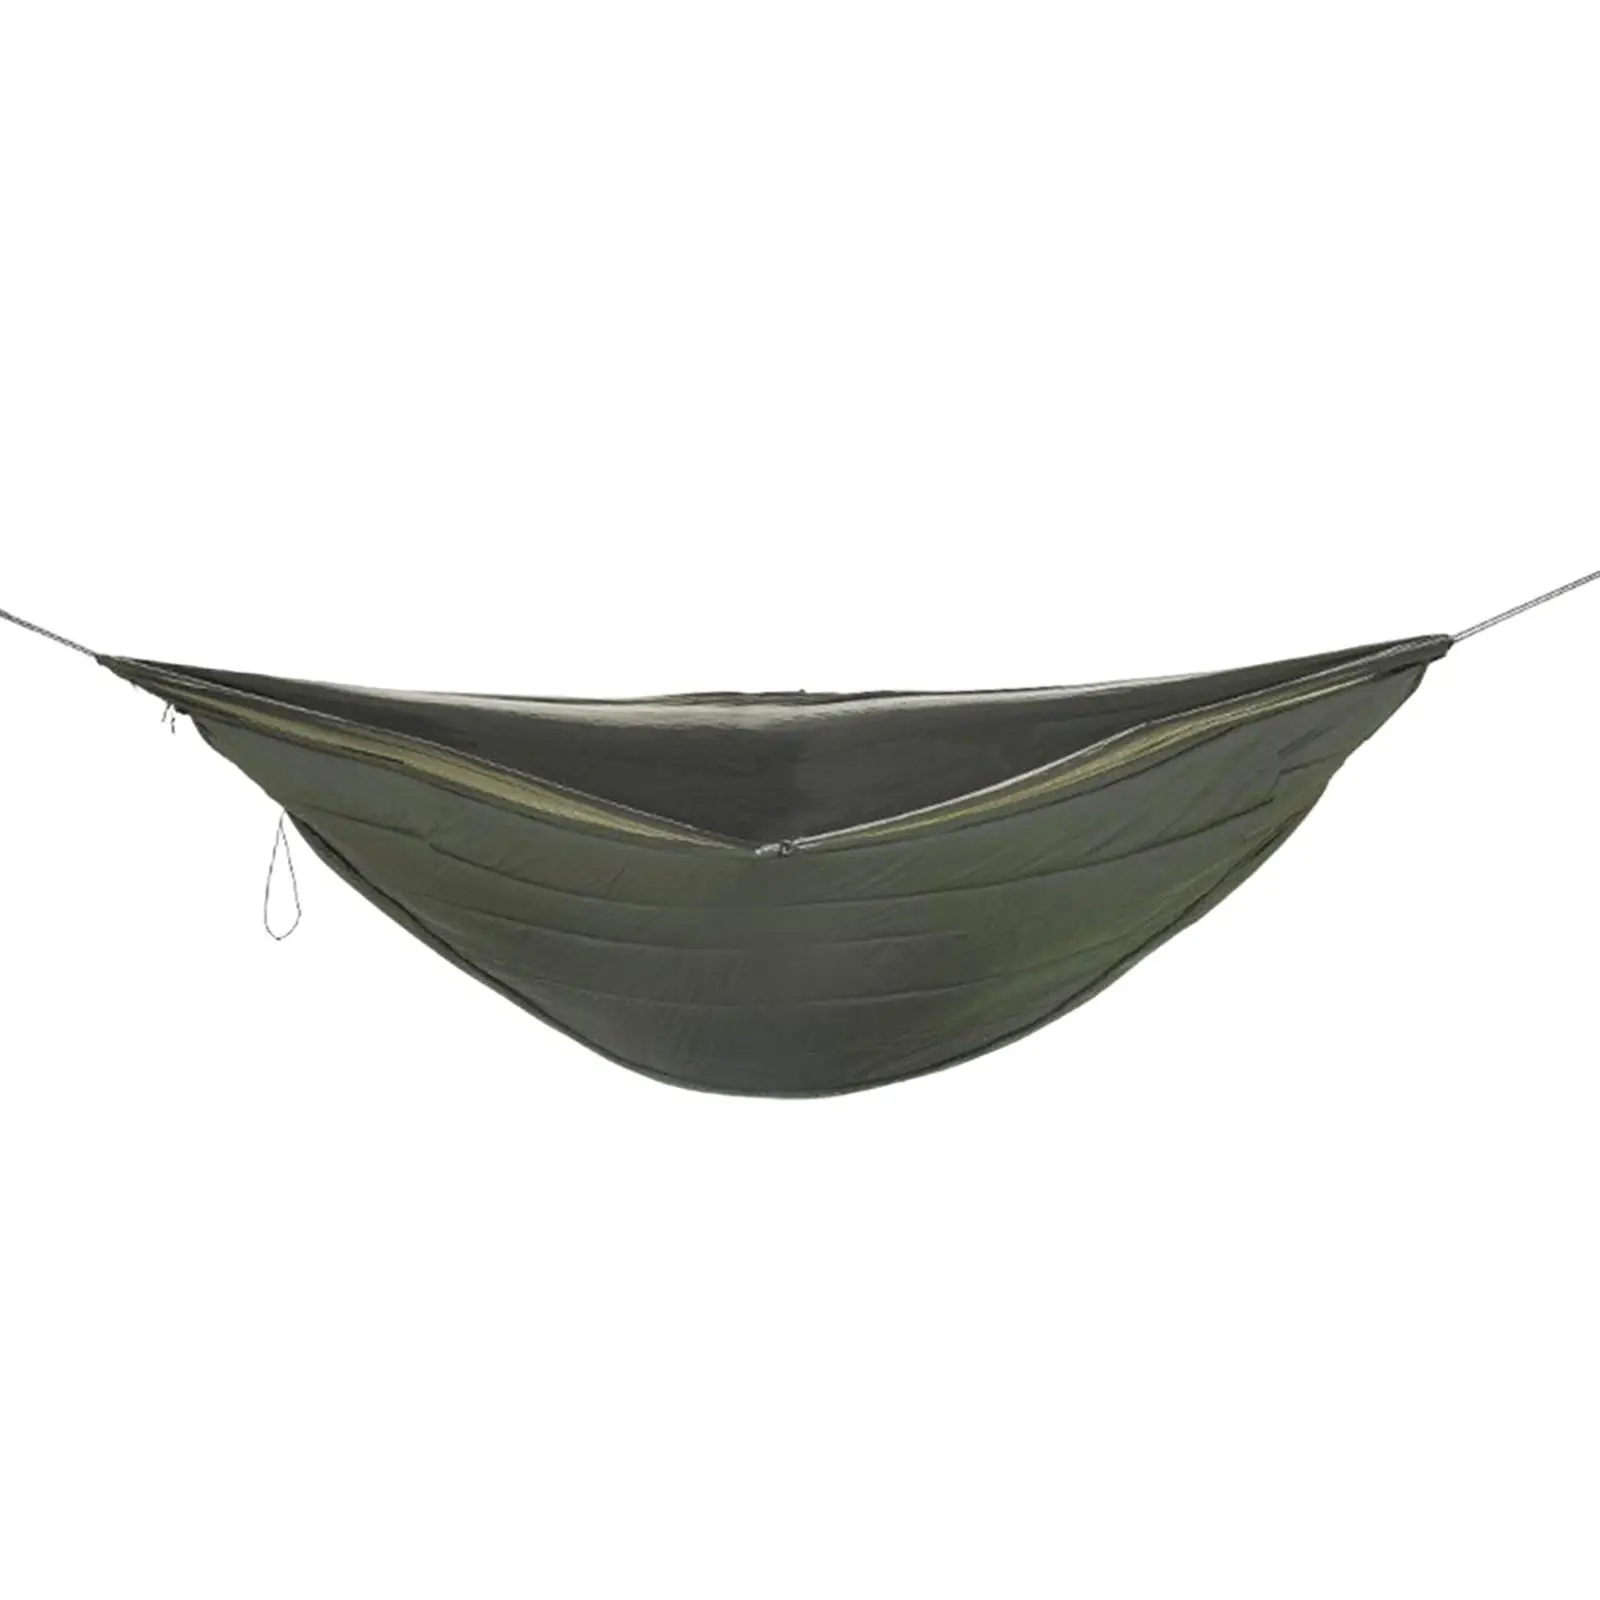 Hammock Underquilt, Lightweight Camping Quilt, Packable Full Length under Blanket